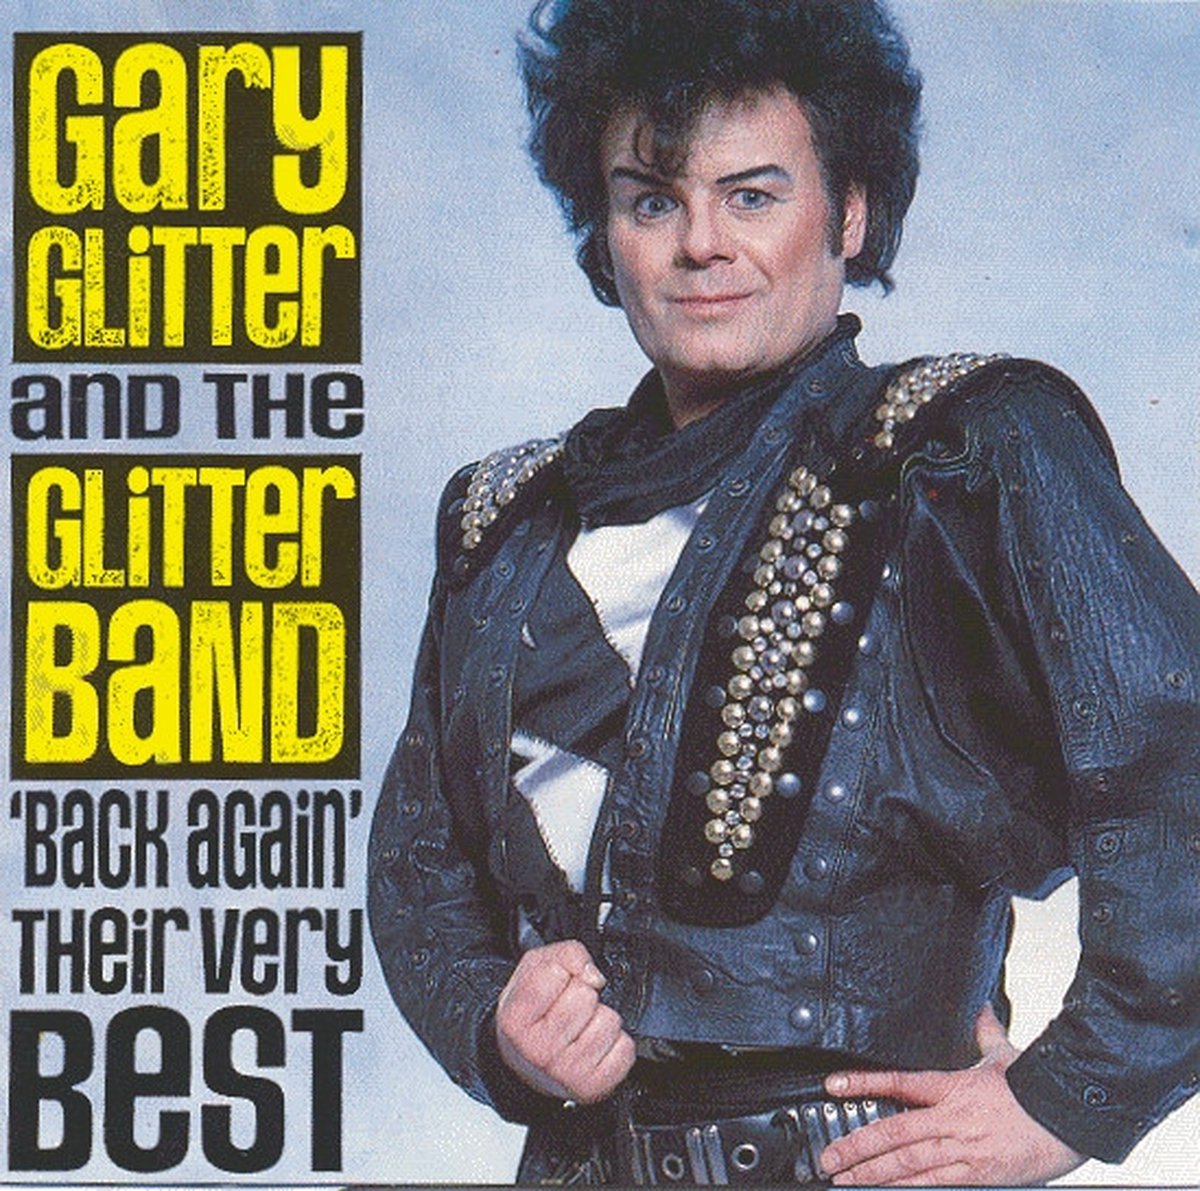 Back Again: The Very Best - Gary Glitter